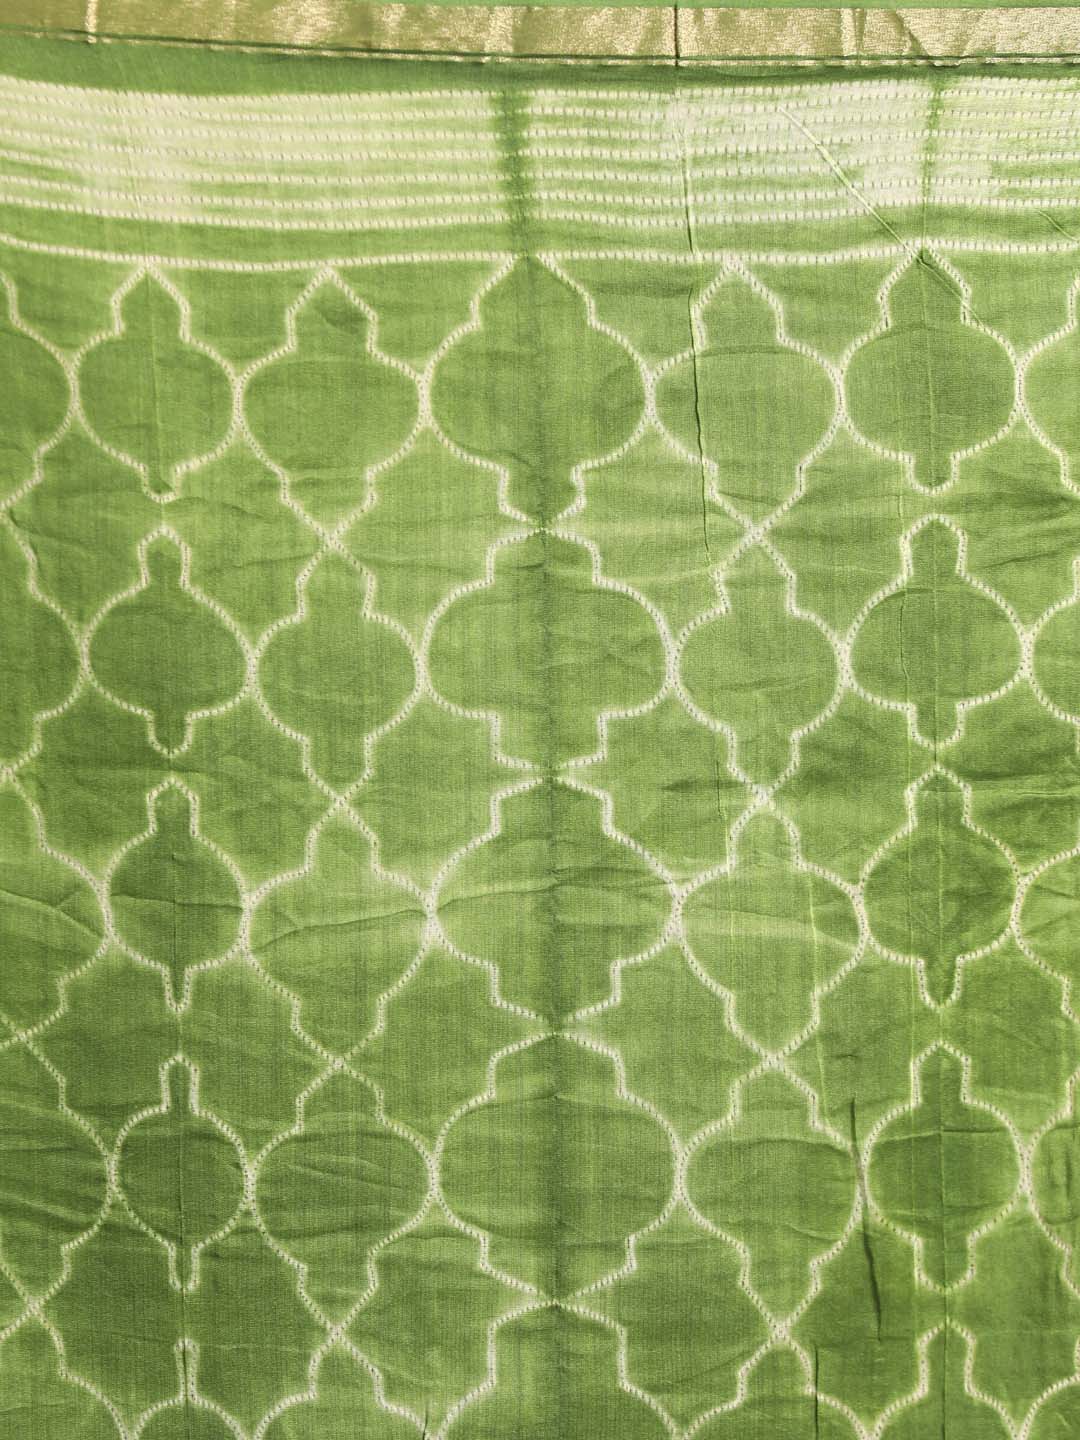 Indethnic Shibori Silk Cotton Saree in Green - Saree Detail View